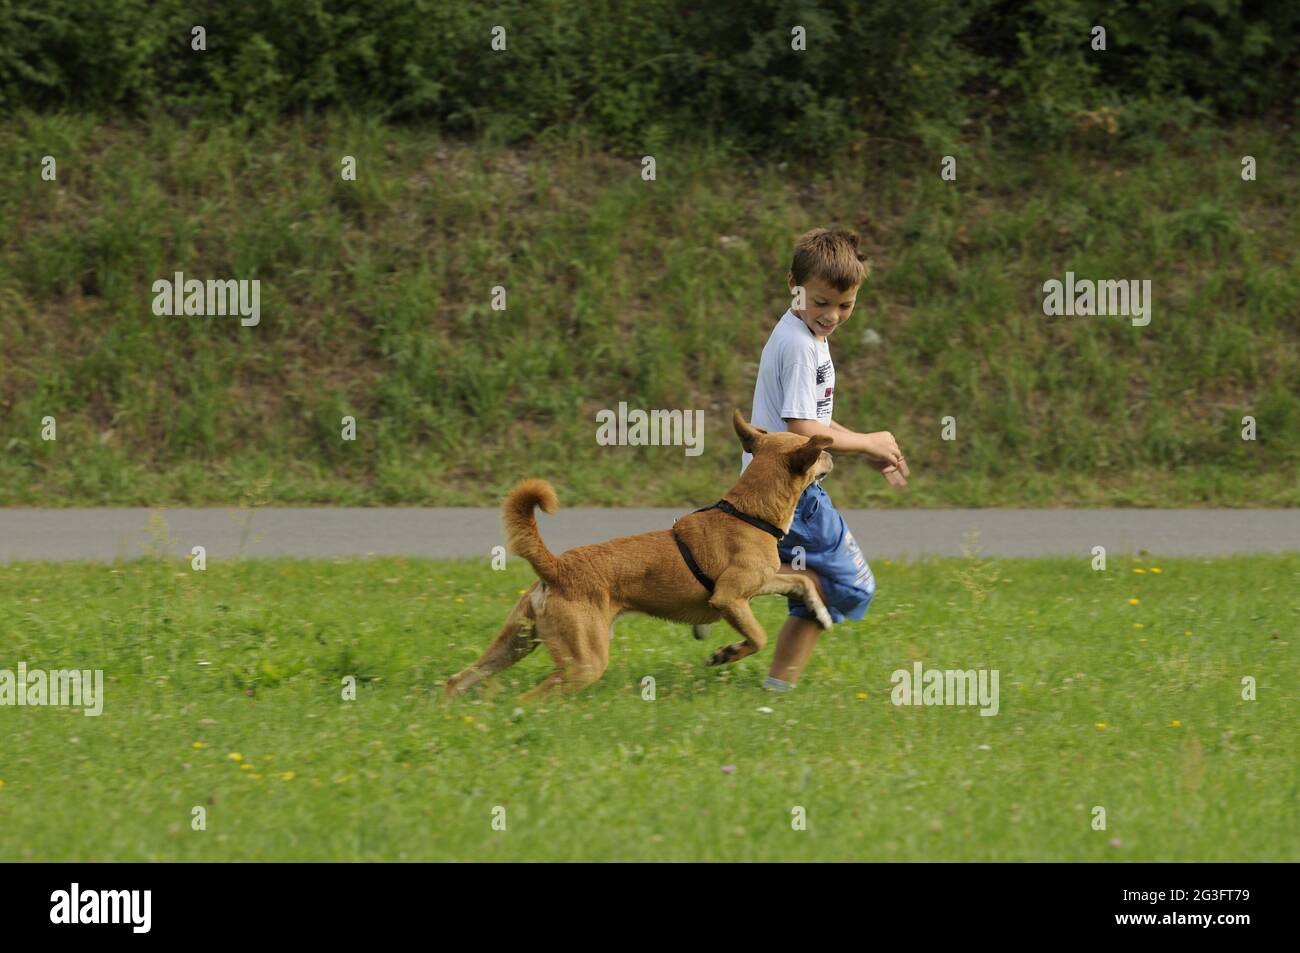 Child with dog Stock Photo